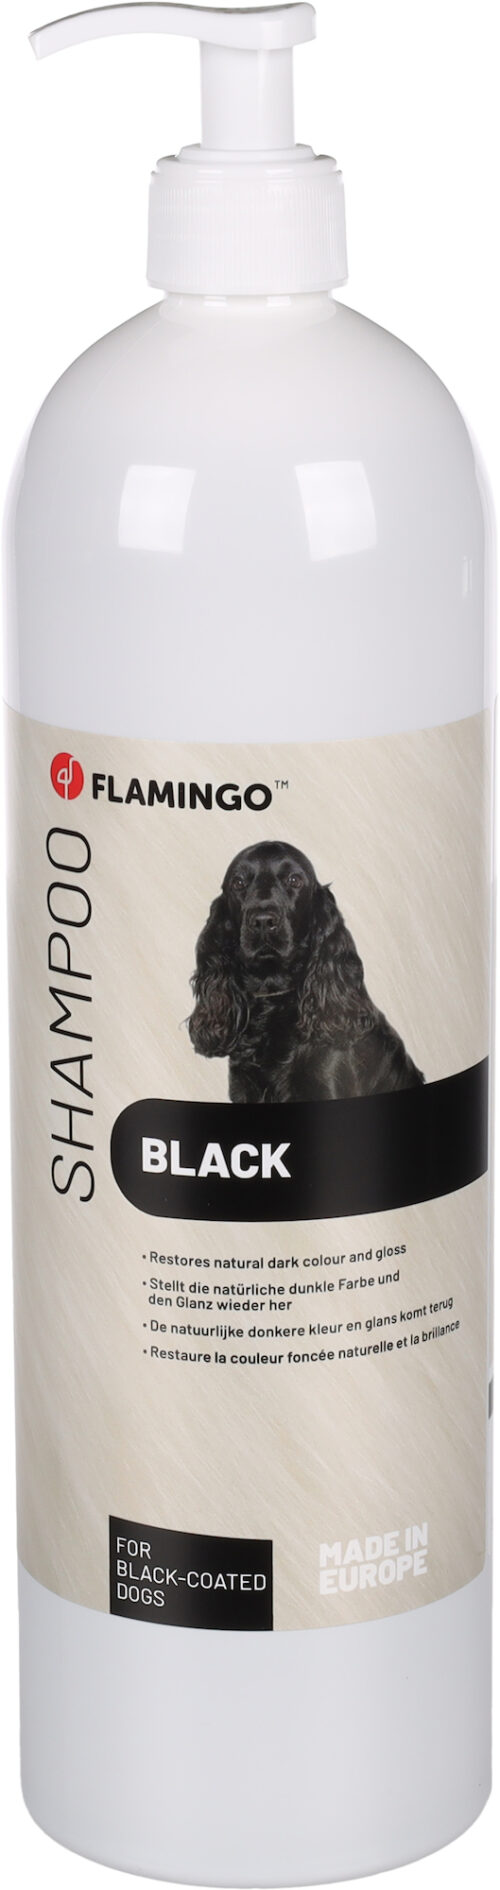 Flamingo šampon za črno dlako 1000ml